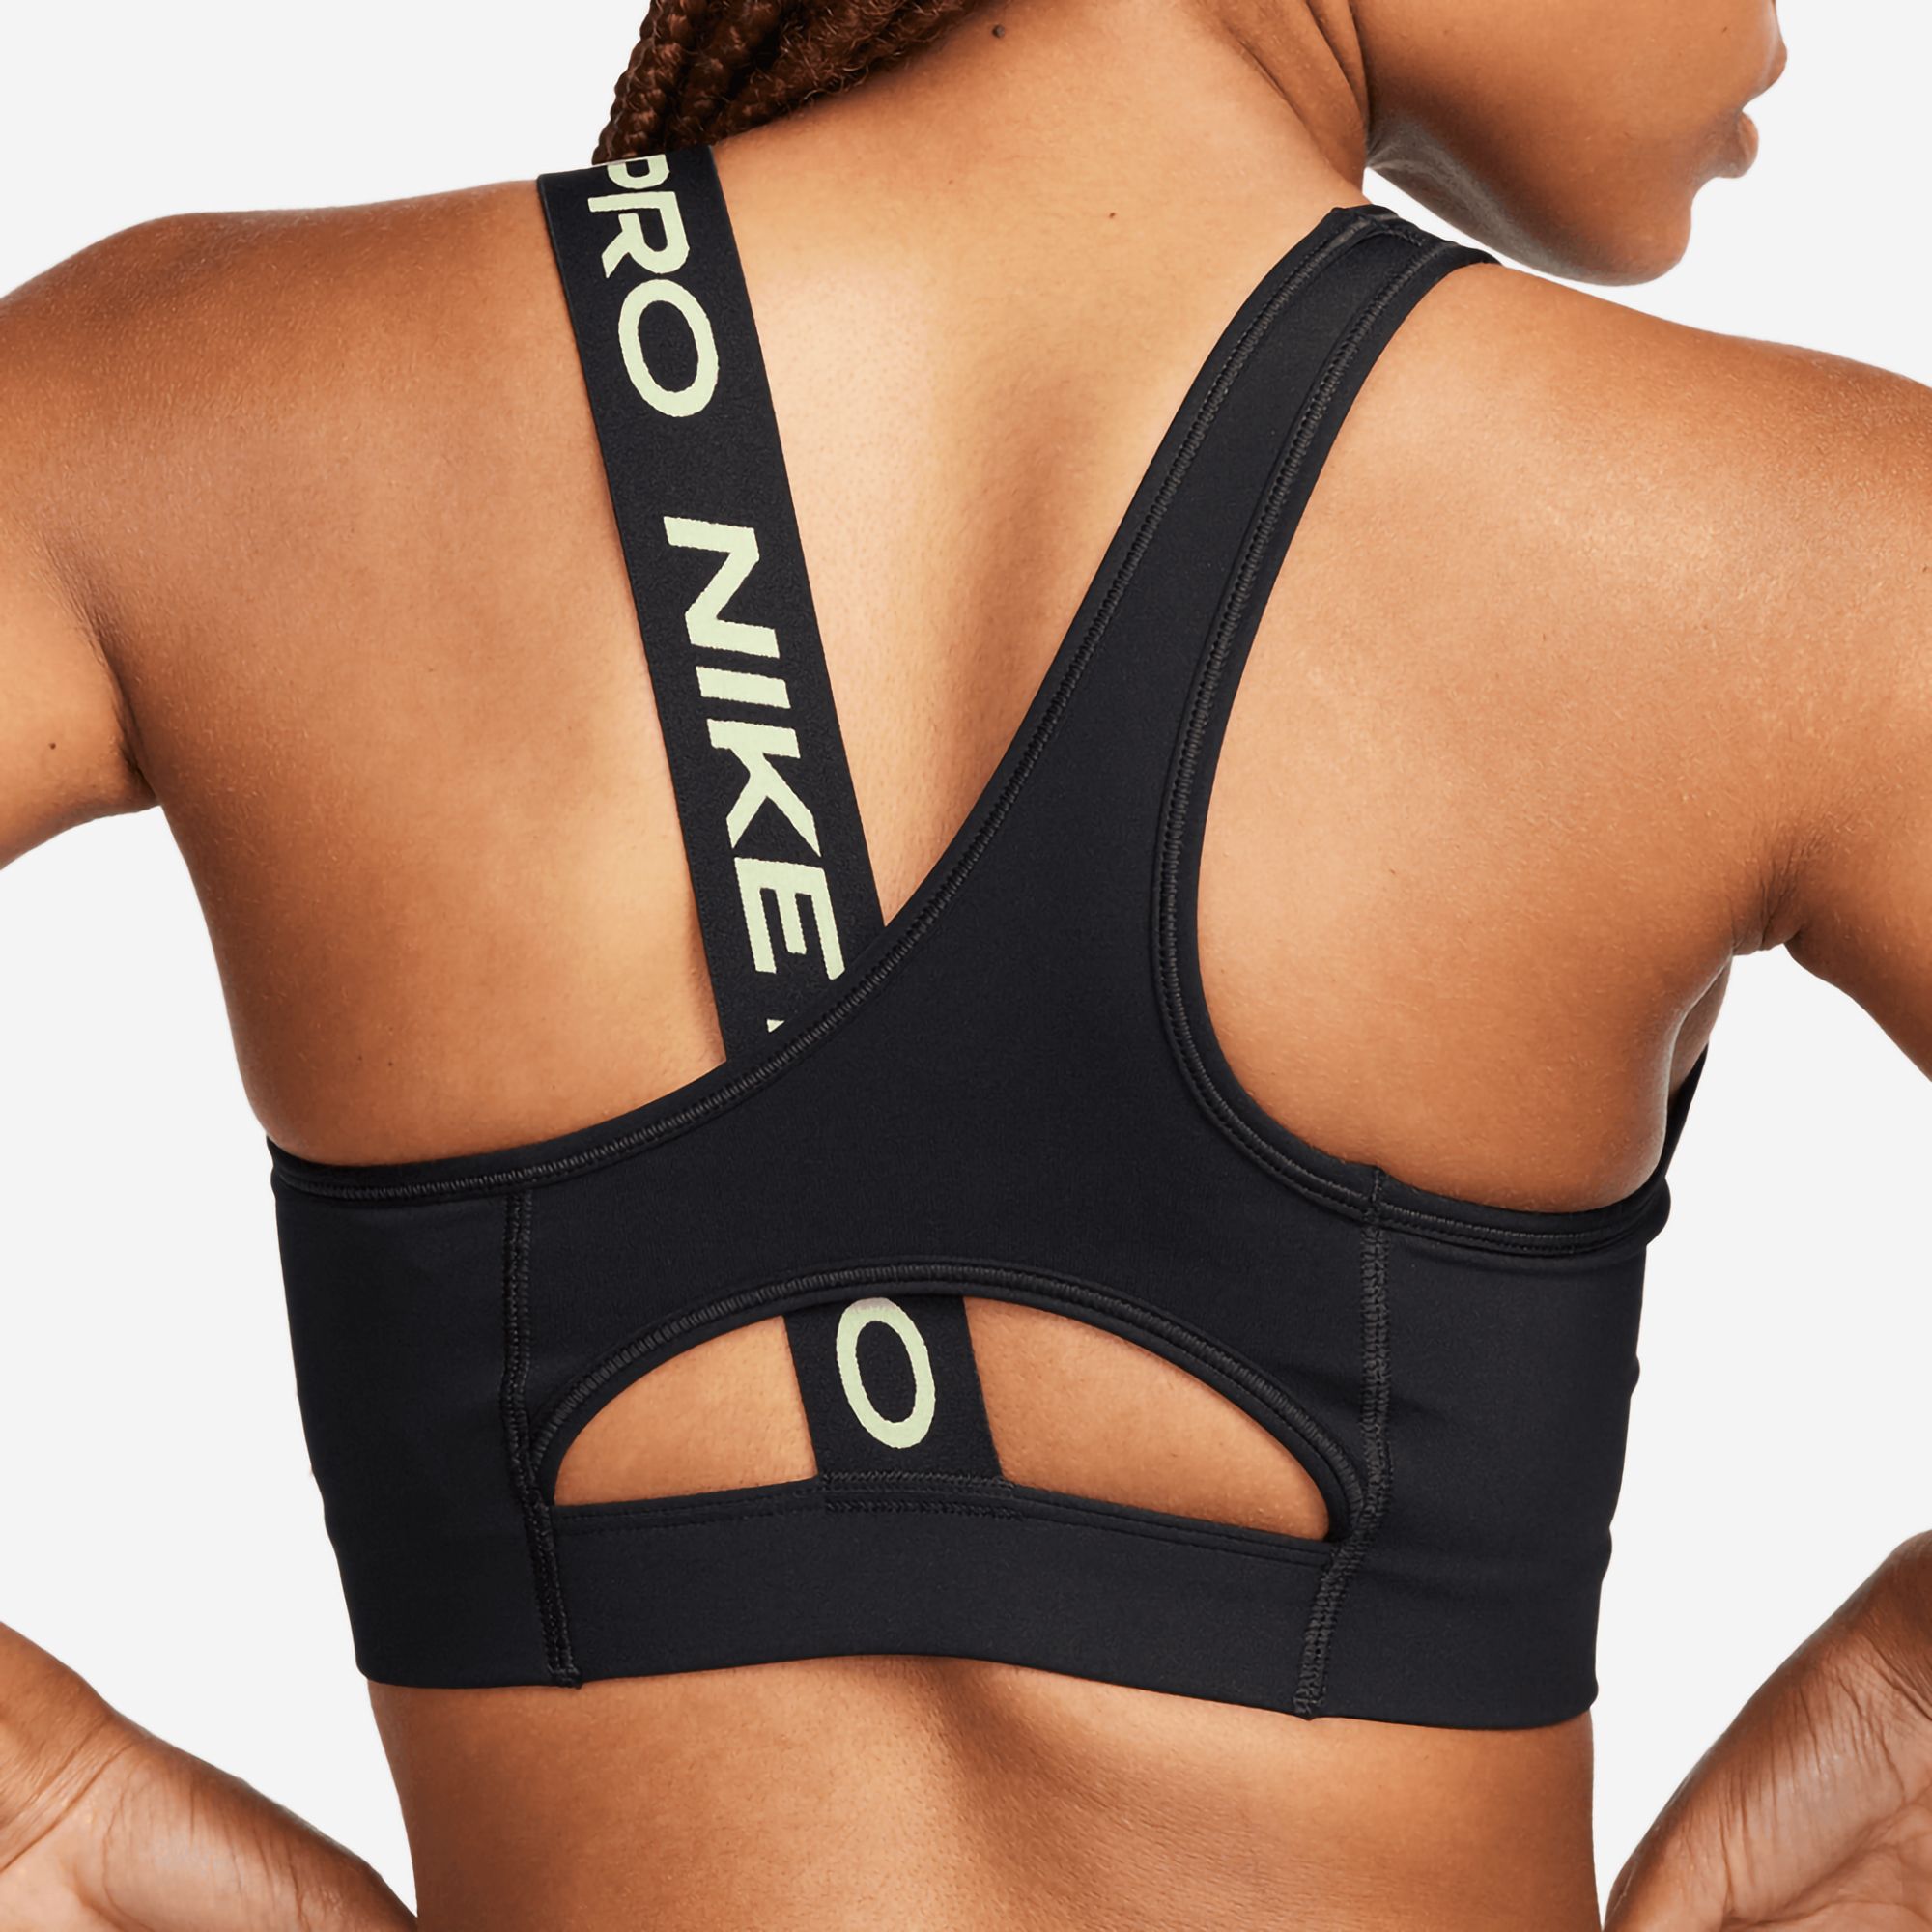 Nike Training - Nike Pro Training swoosh asymmetric sports bra in black and  yellow